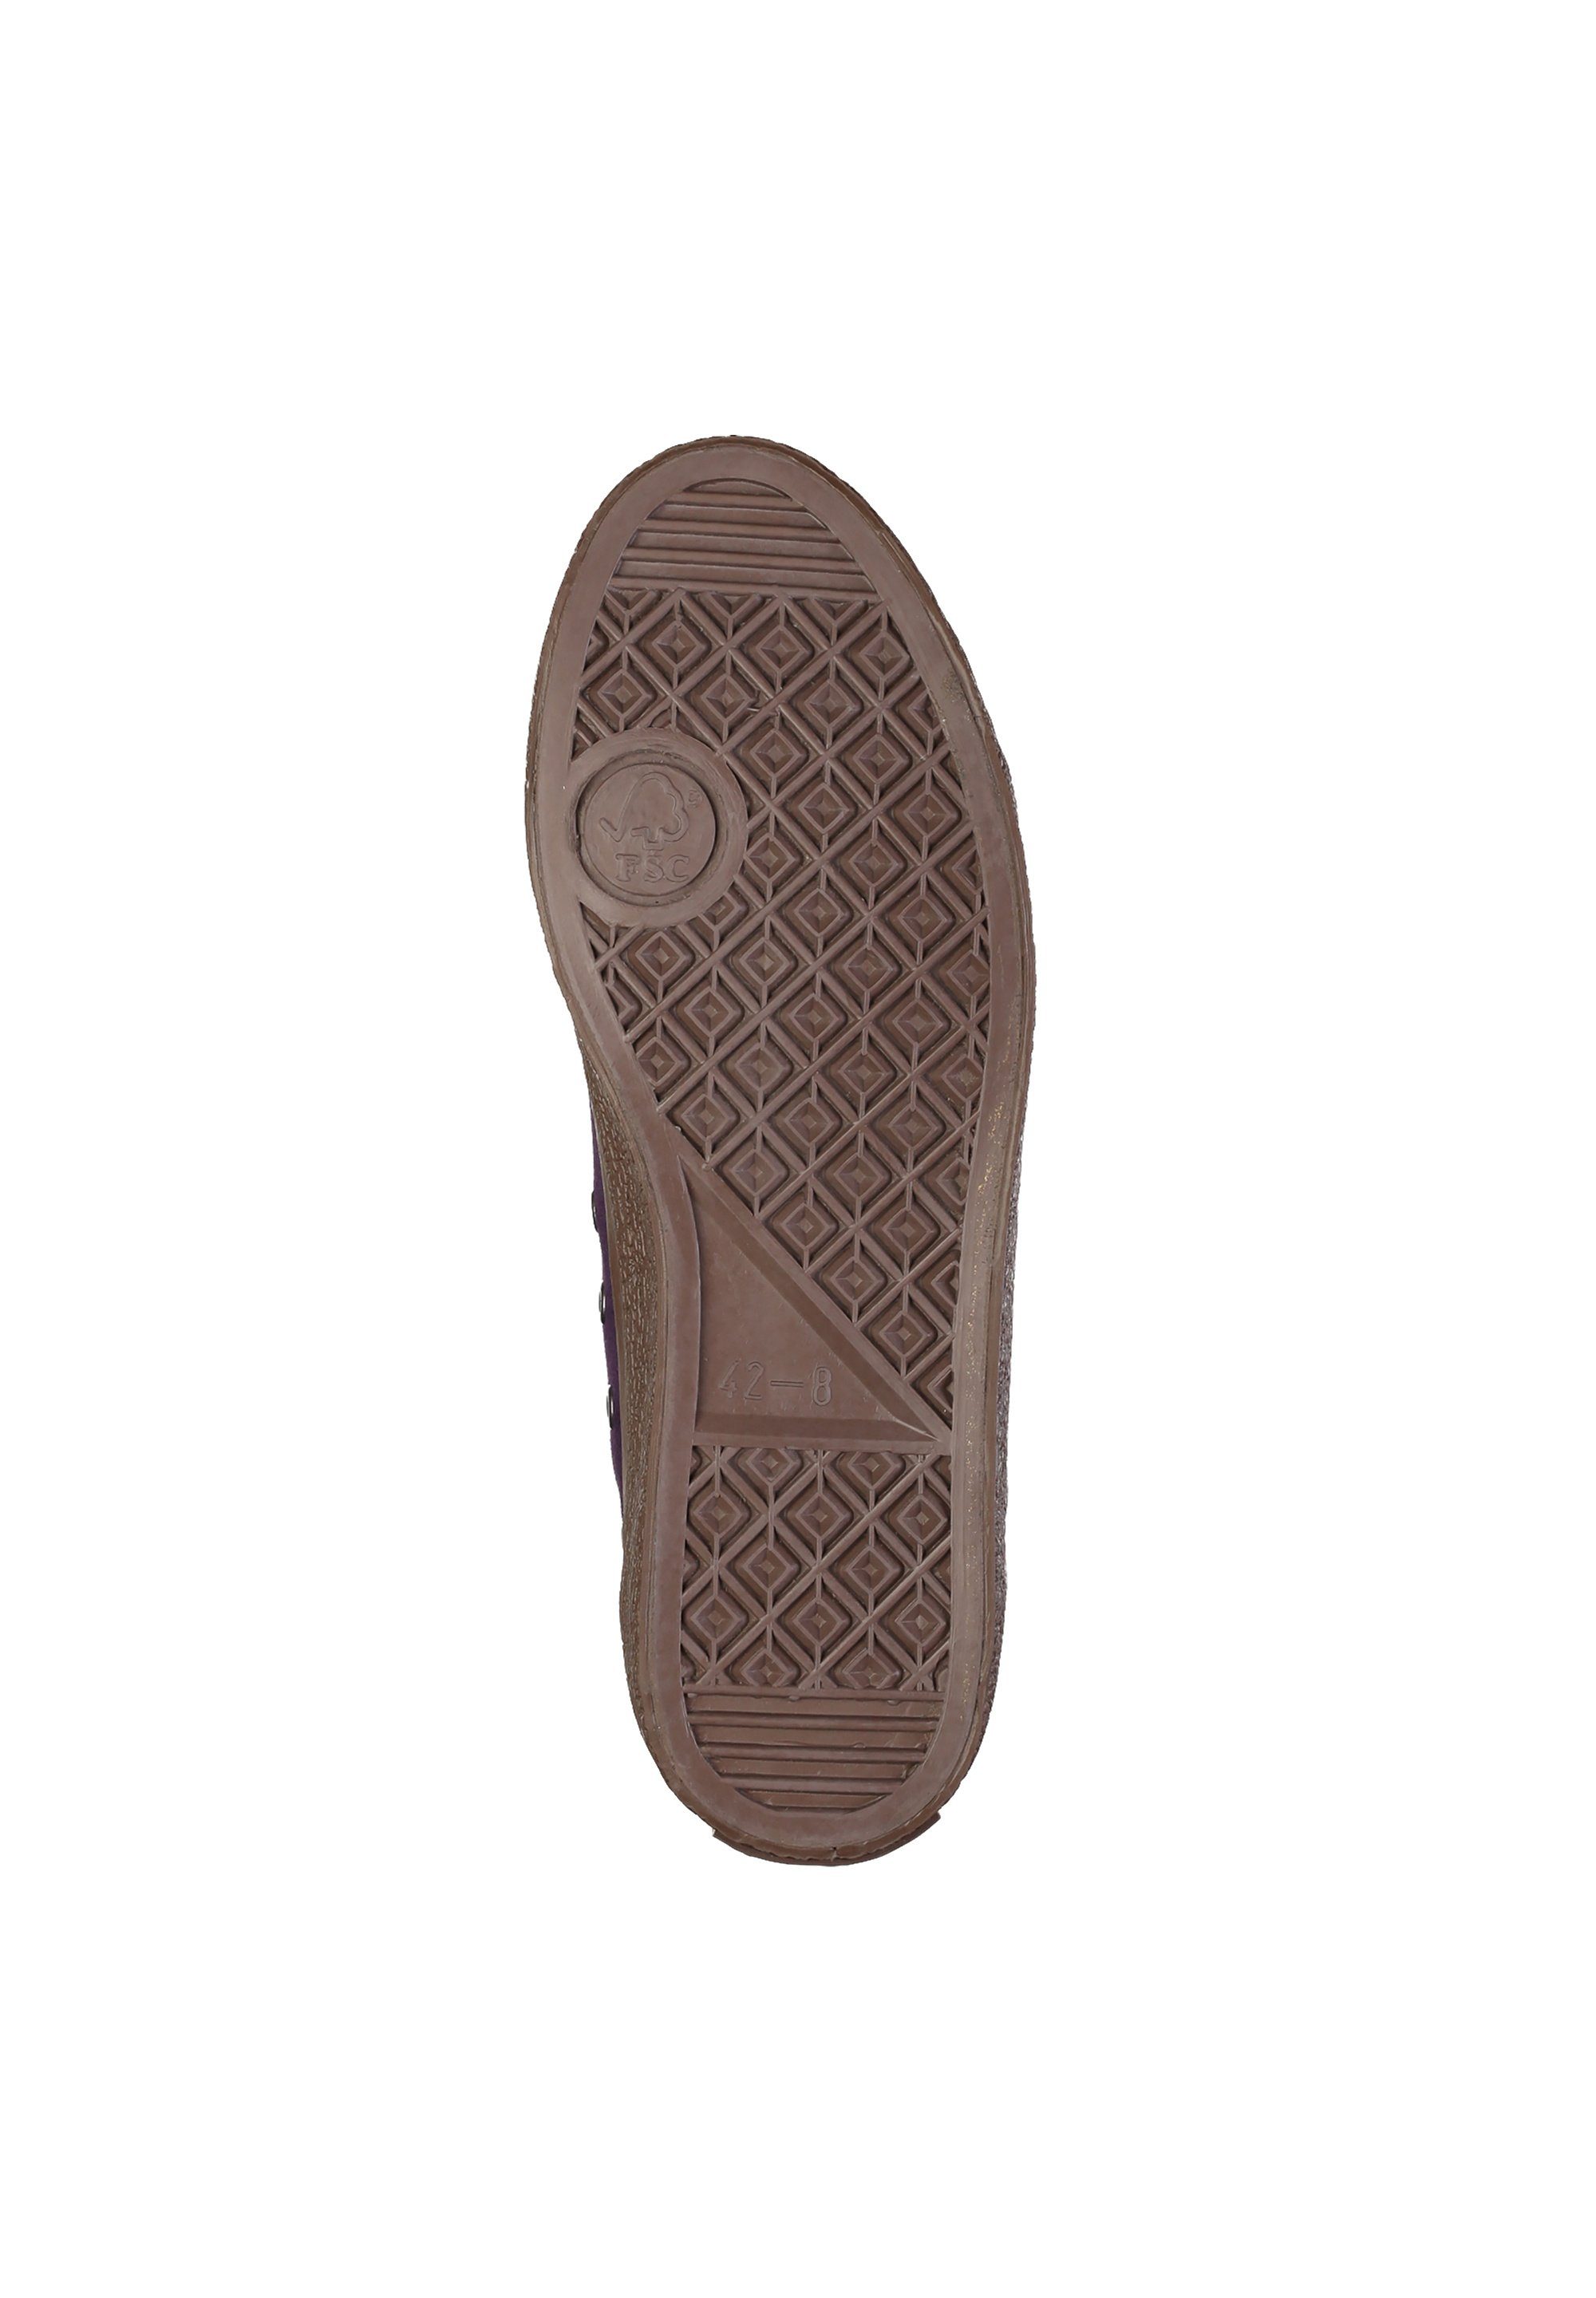 ETHLETIC Goto Produkt Sneaker melange grey Lo Fairtrade